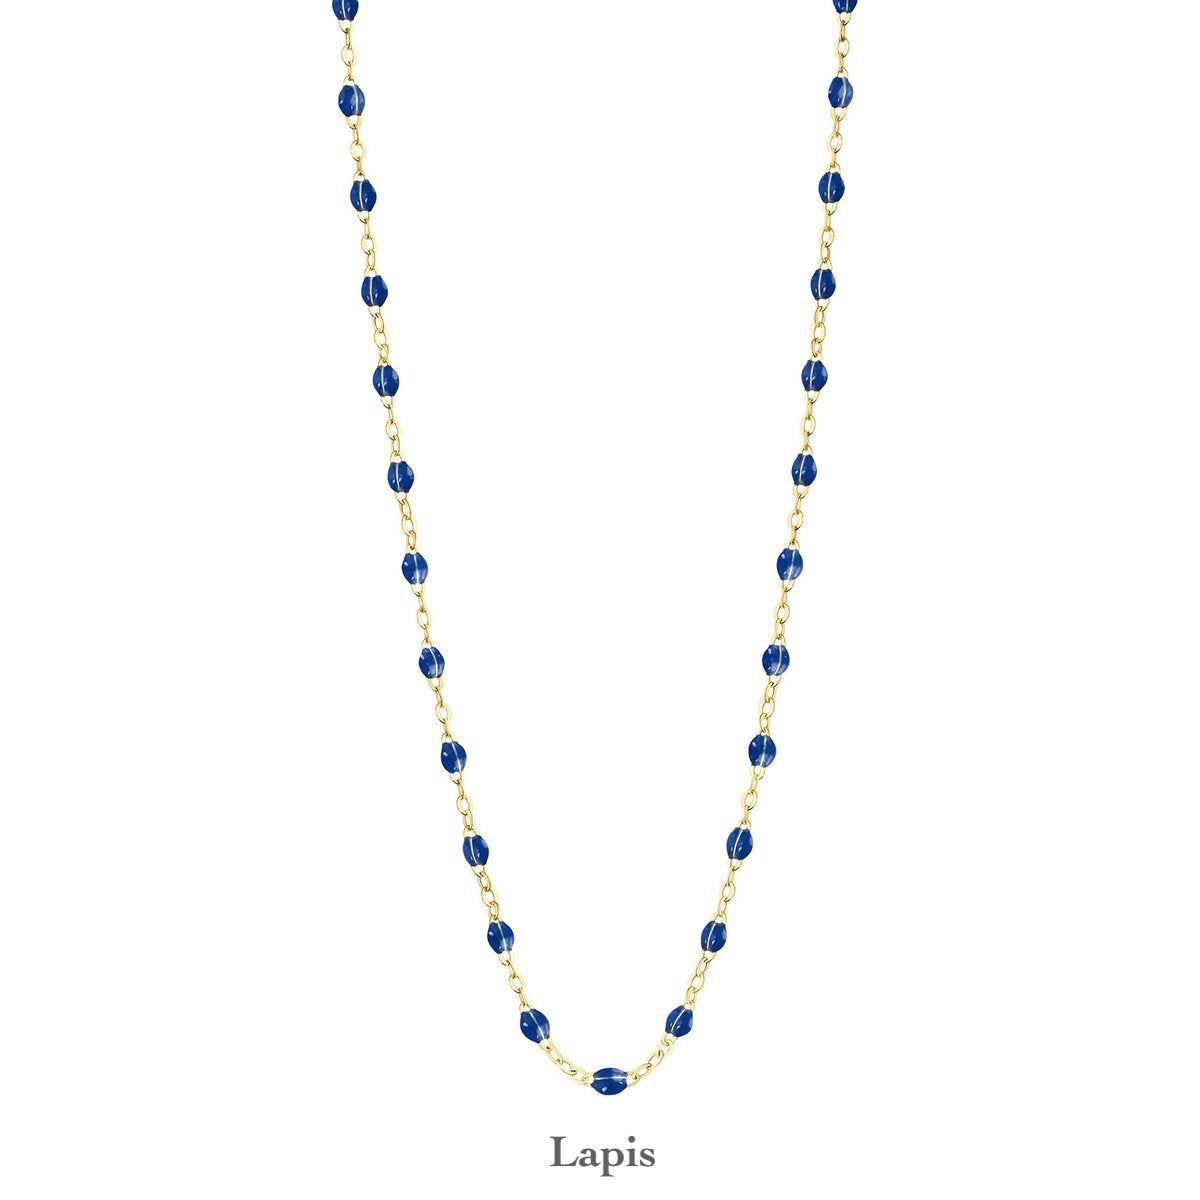 Gigi Clozeau Opal Pearled Lace Cross Pendant Necklace